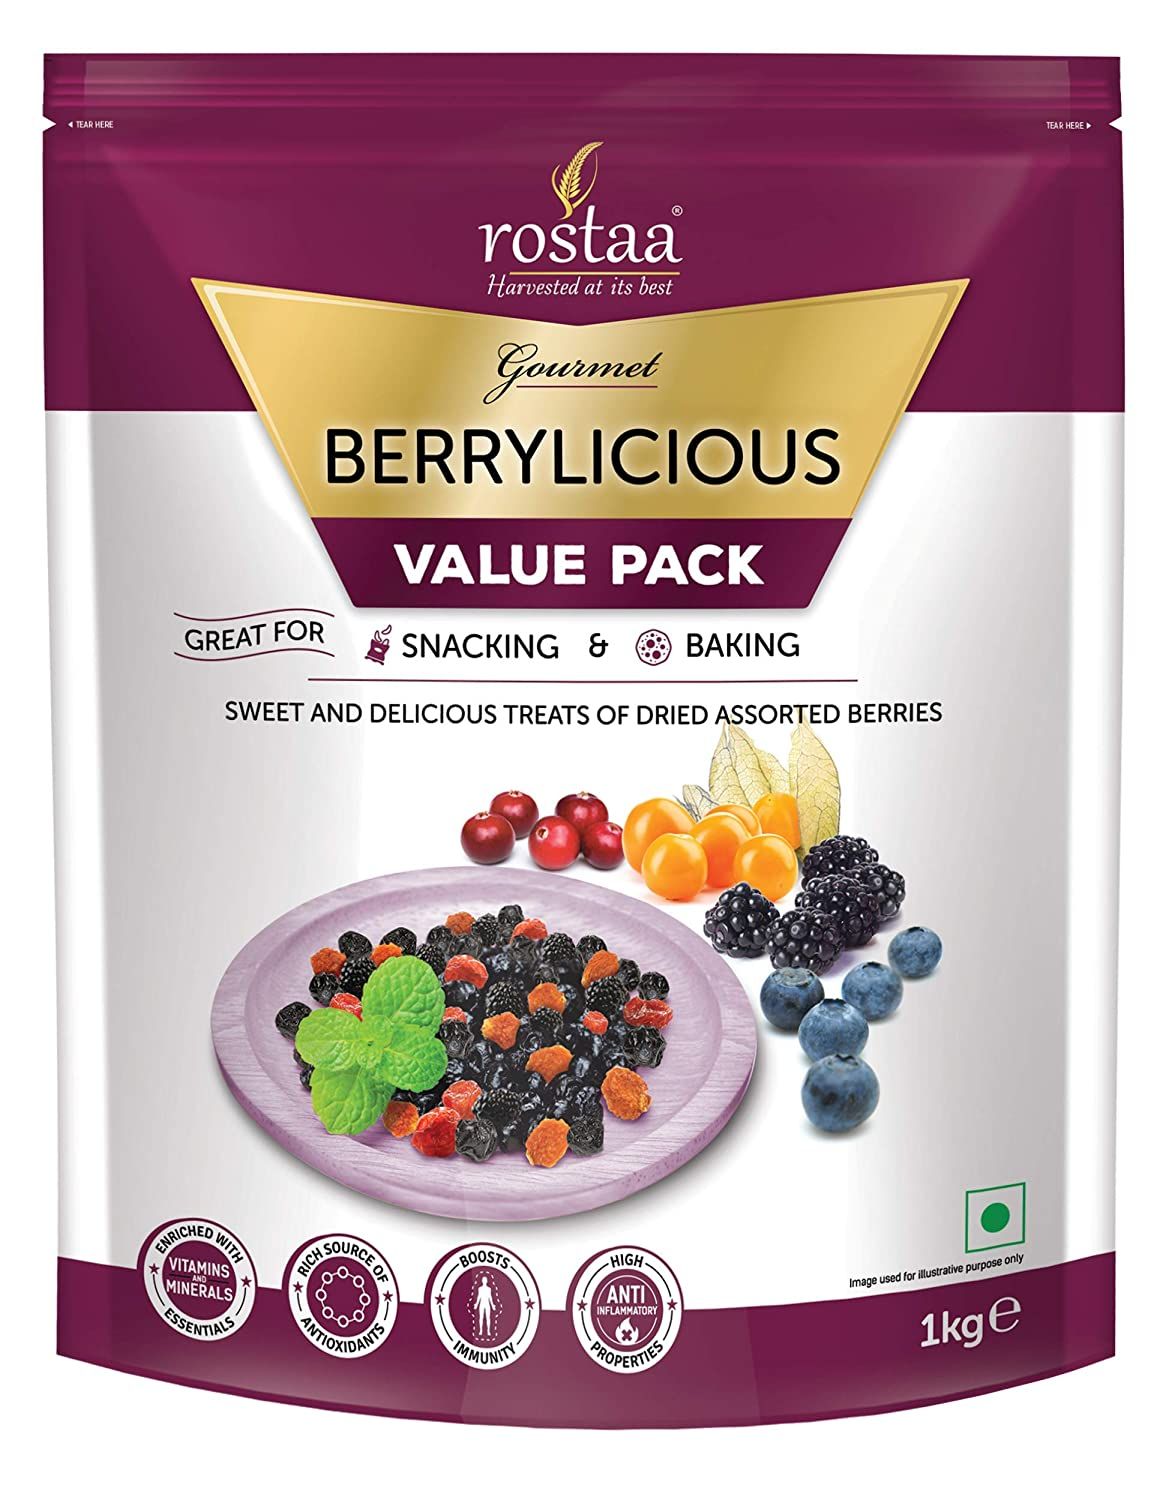 Rostaa Premium Berrylicious Image